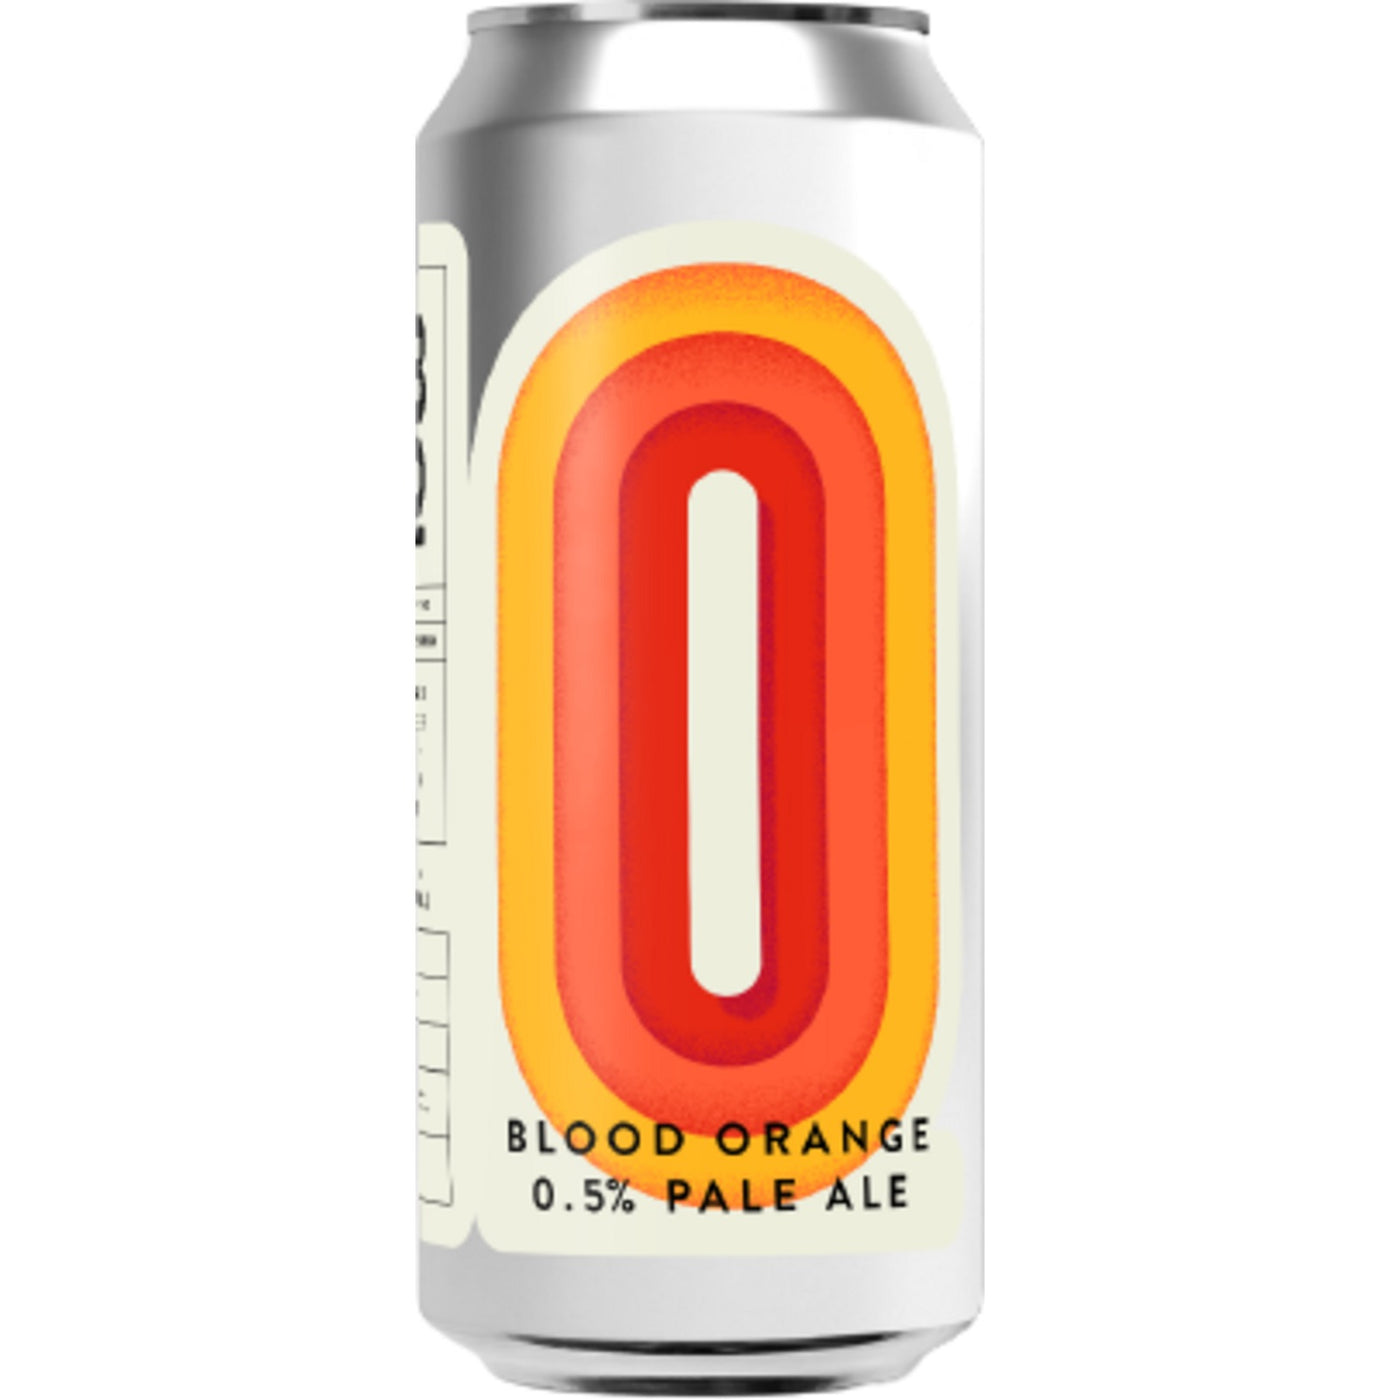 00| Pale Ale Blood Orange 0.5%